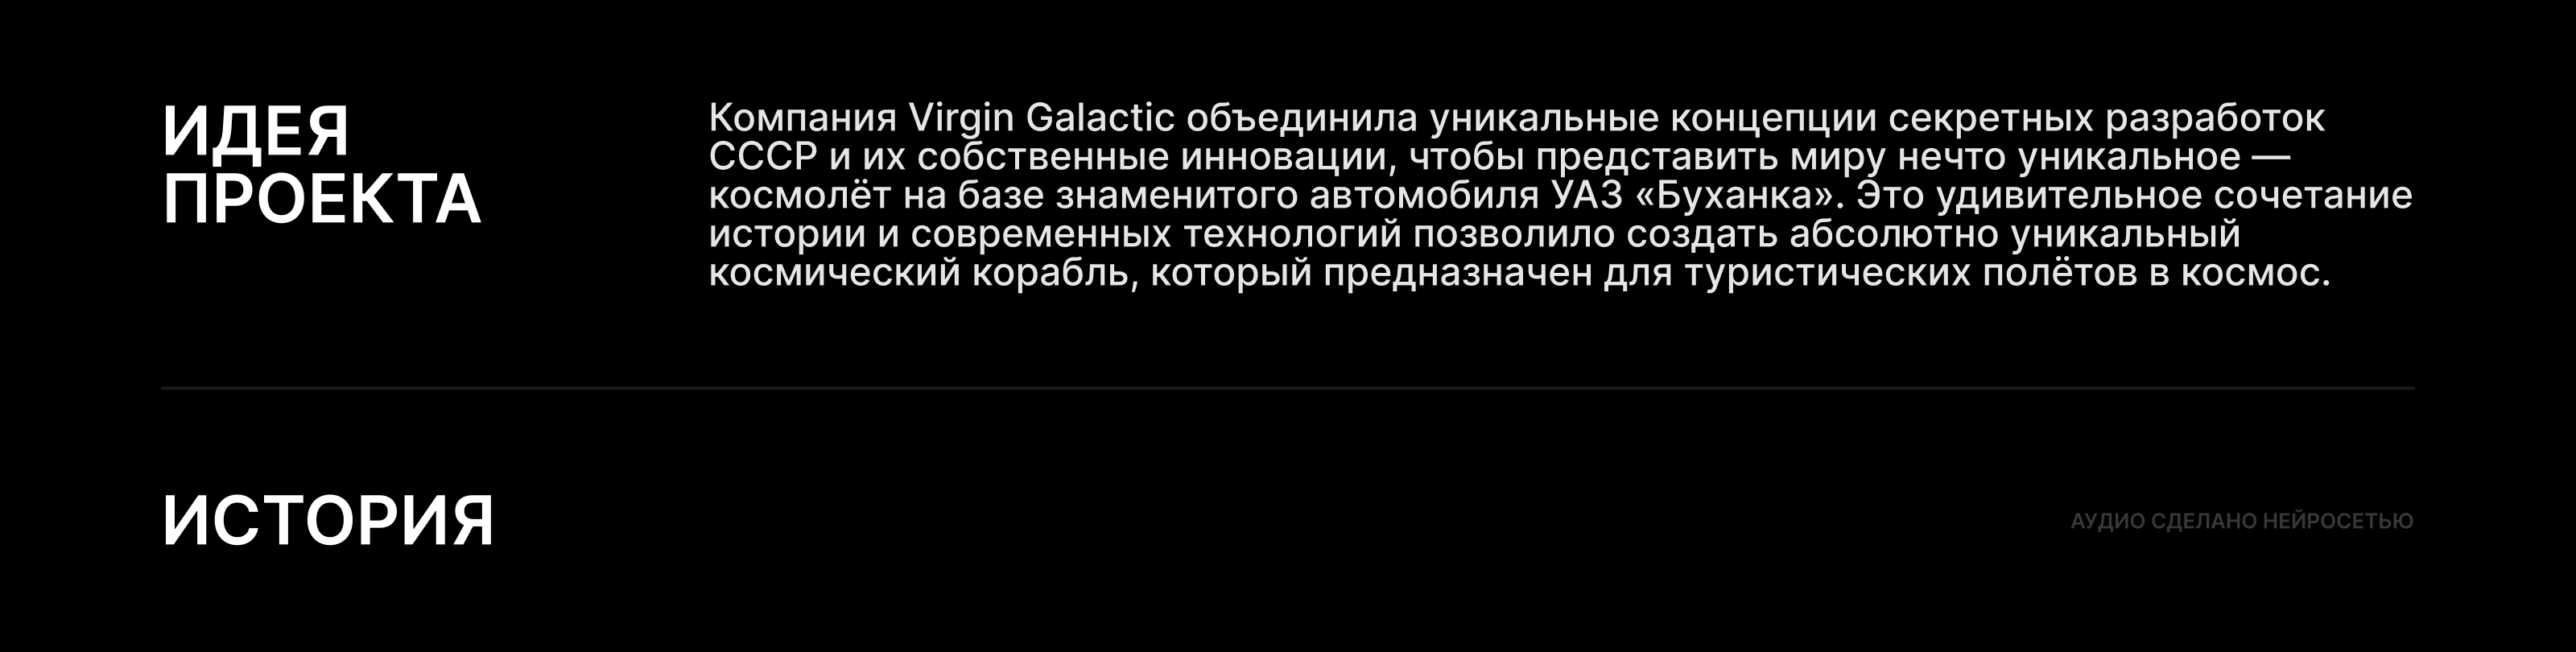 Virgin Galactic x УАЗ|Pyrobattle — Изображение №1 — Интерфейсы, 3D на Dprofile